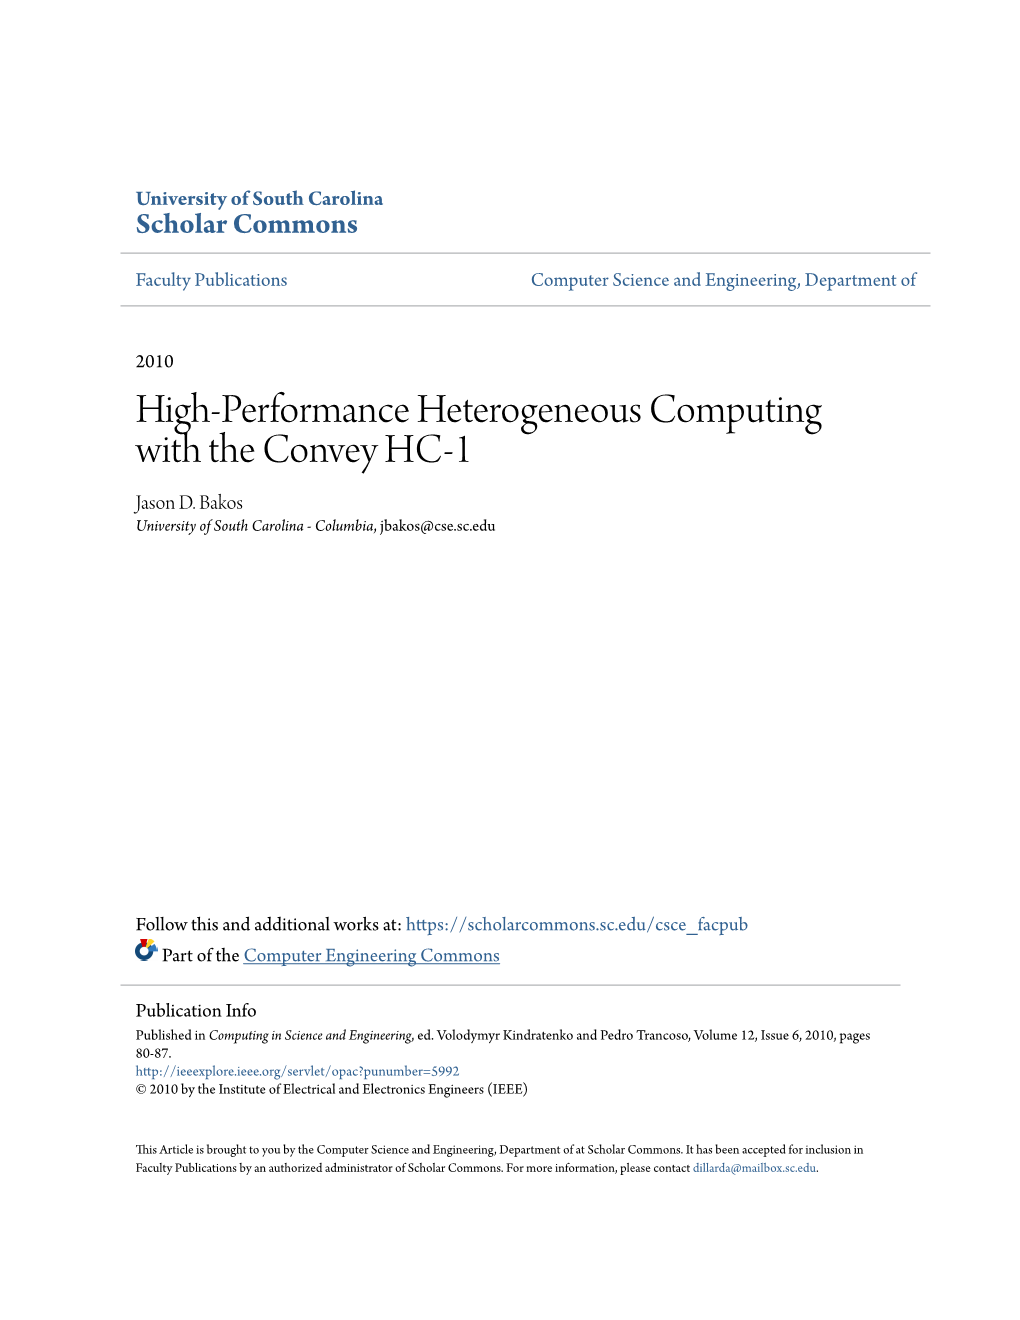 High-Performance Heterogeneous Computing with the Convey HC-1 Jason D